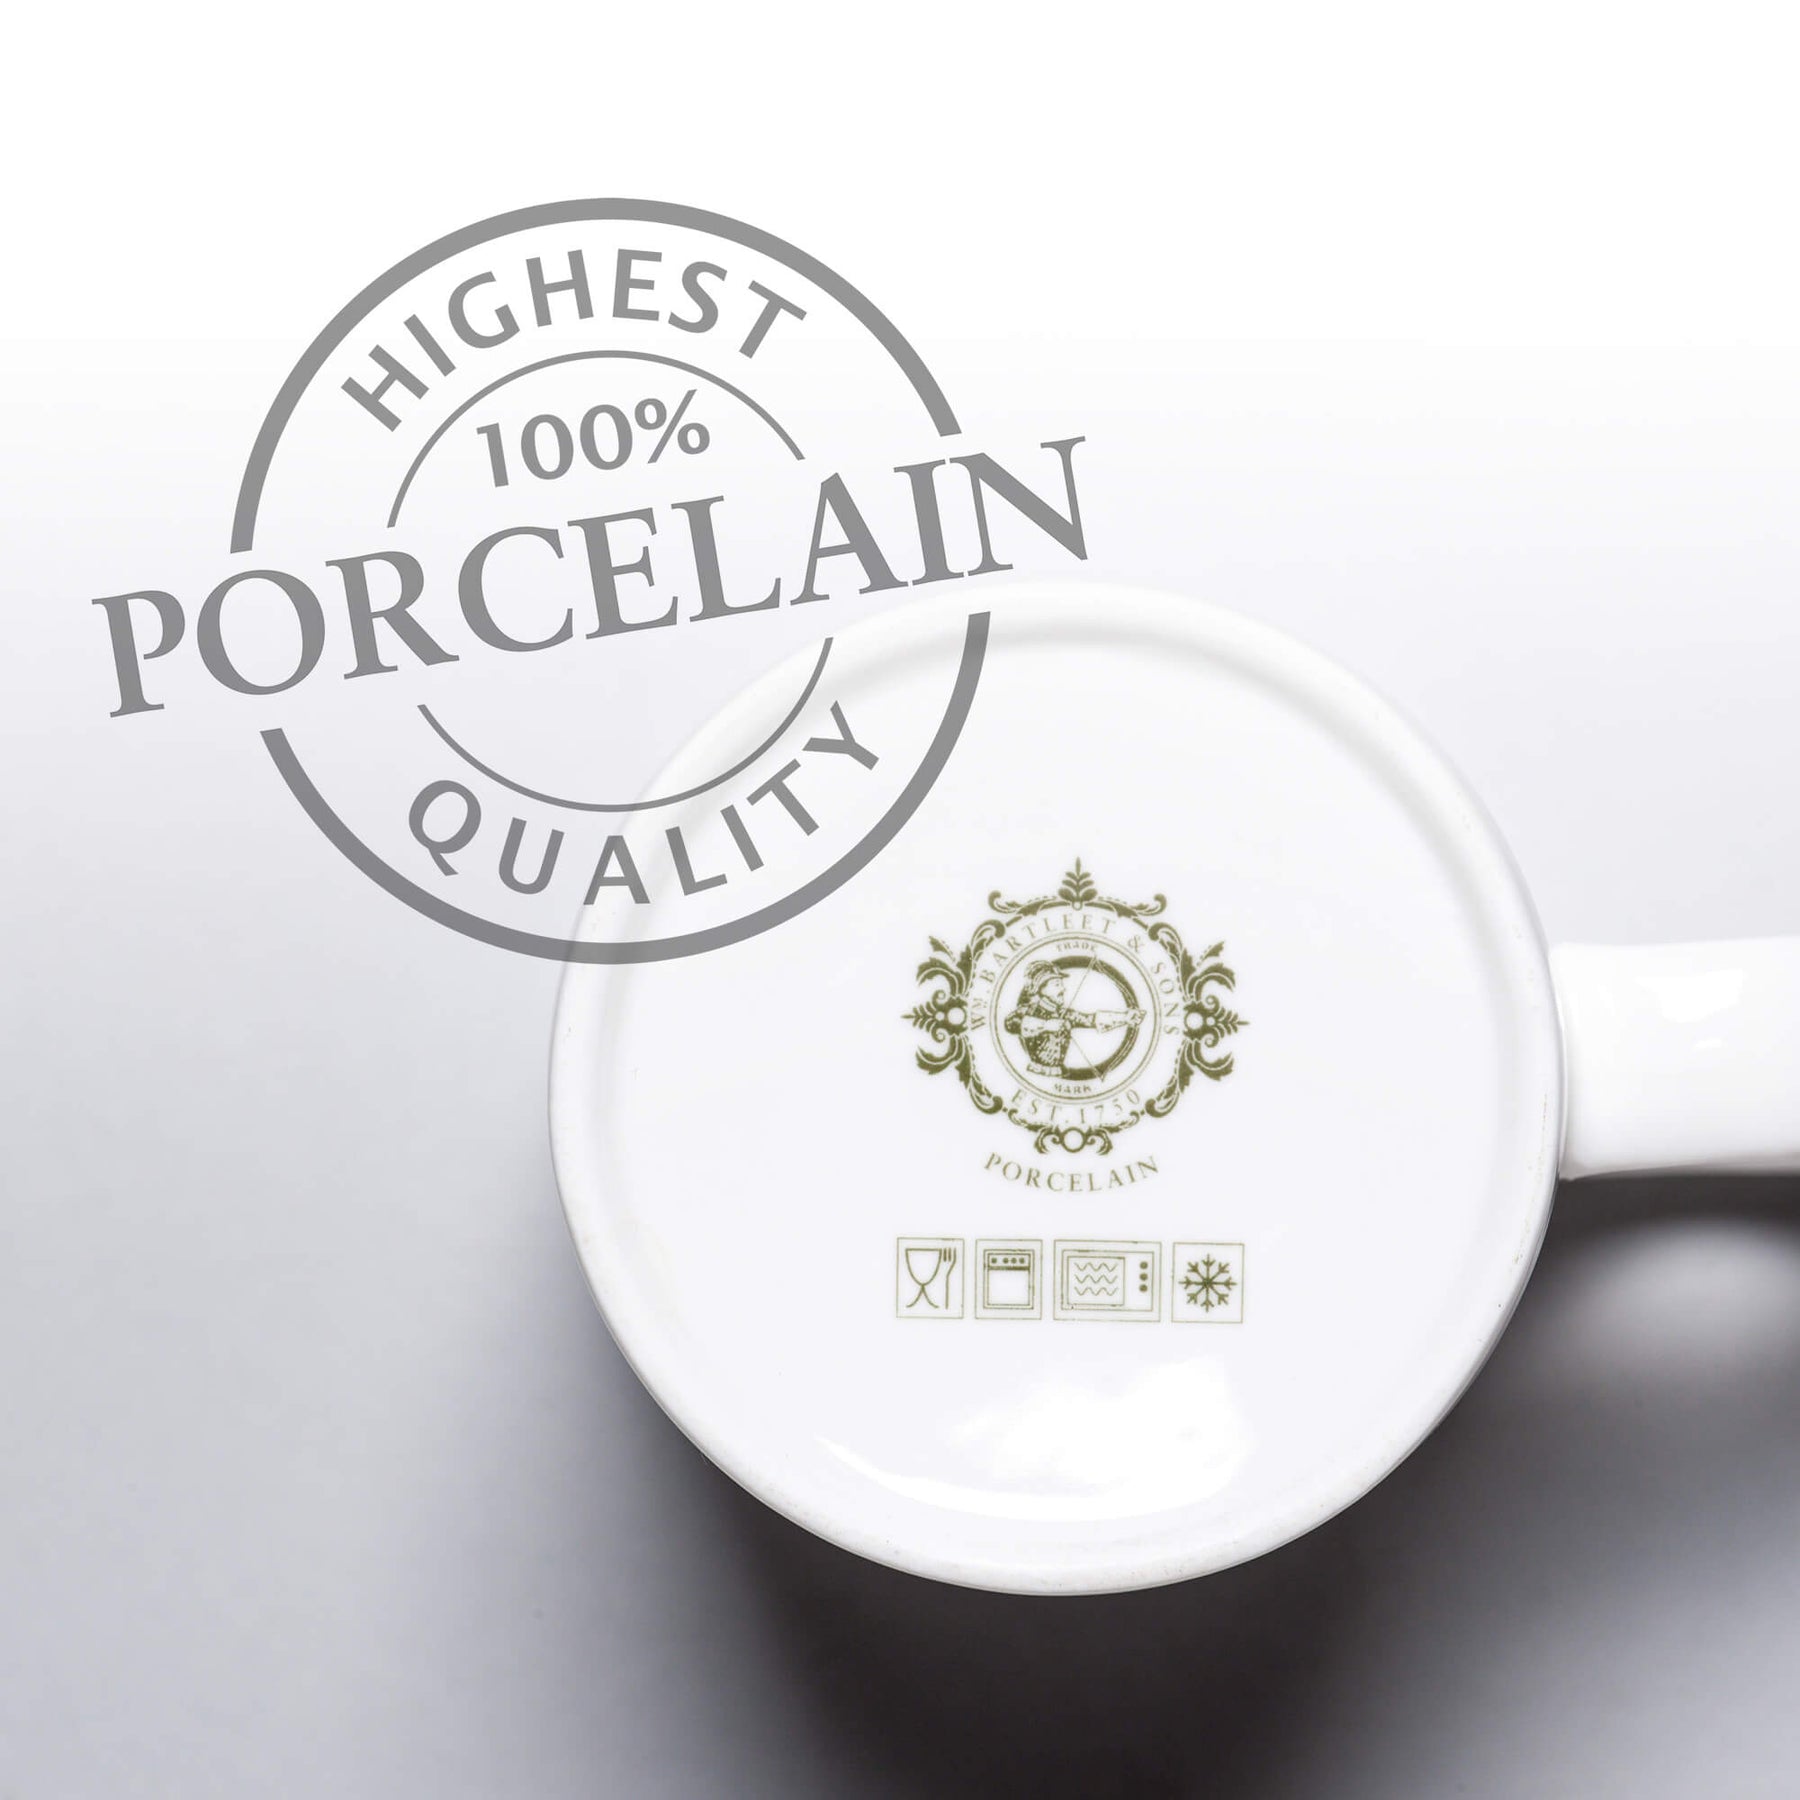 Porcelain Original Mug, 1 Pint, Set of 2